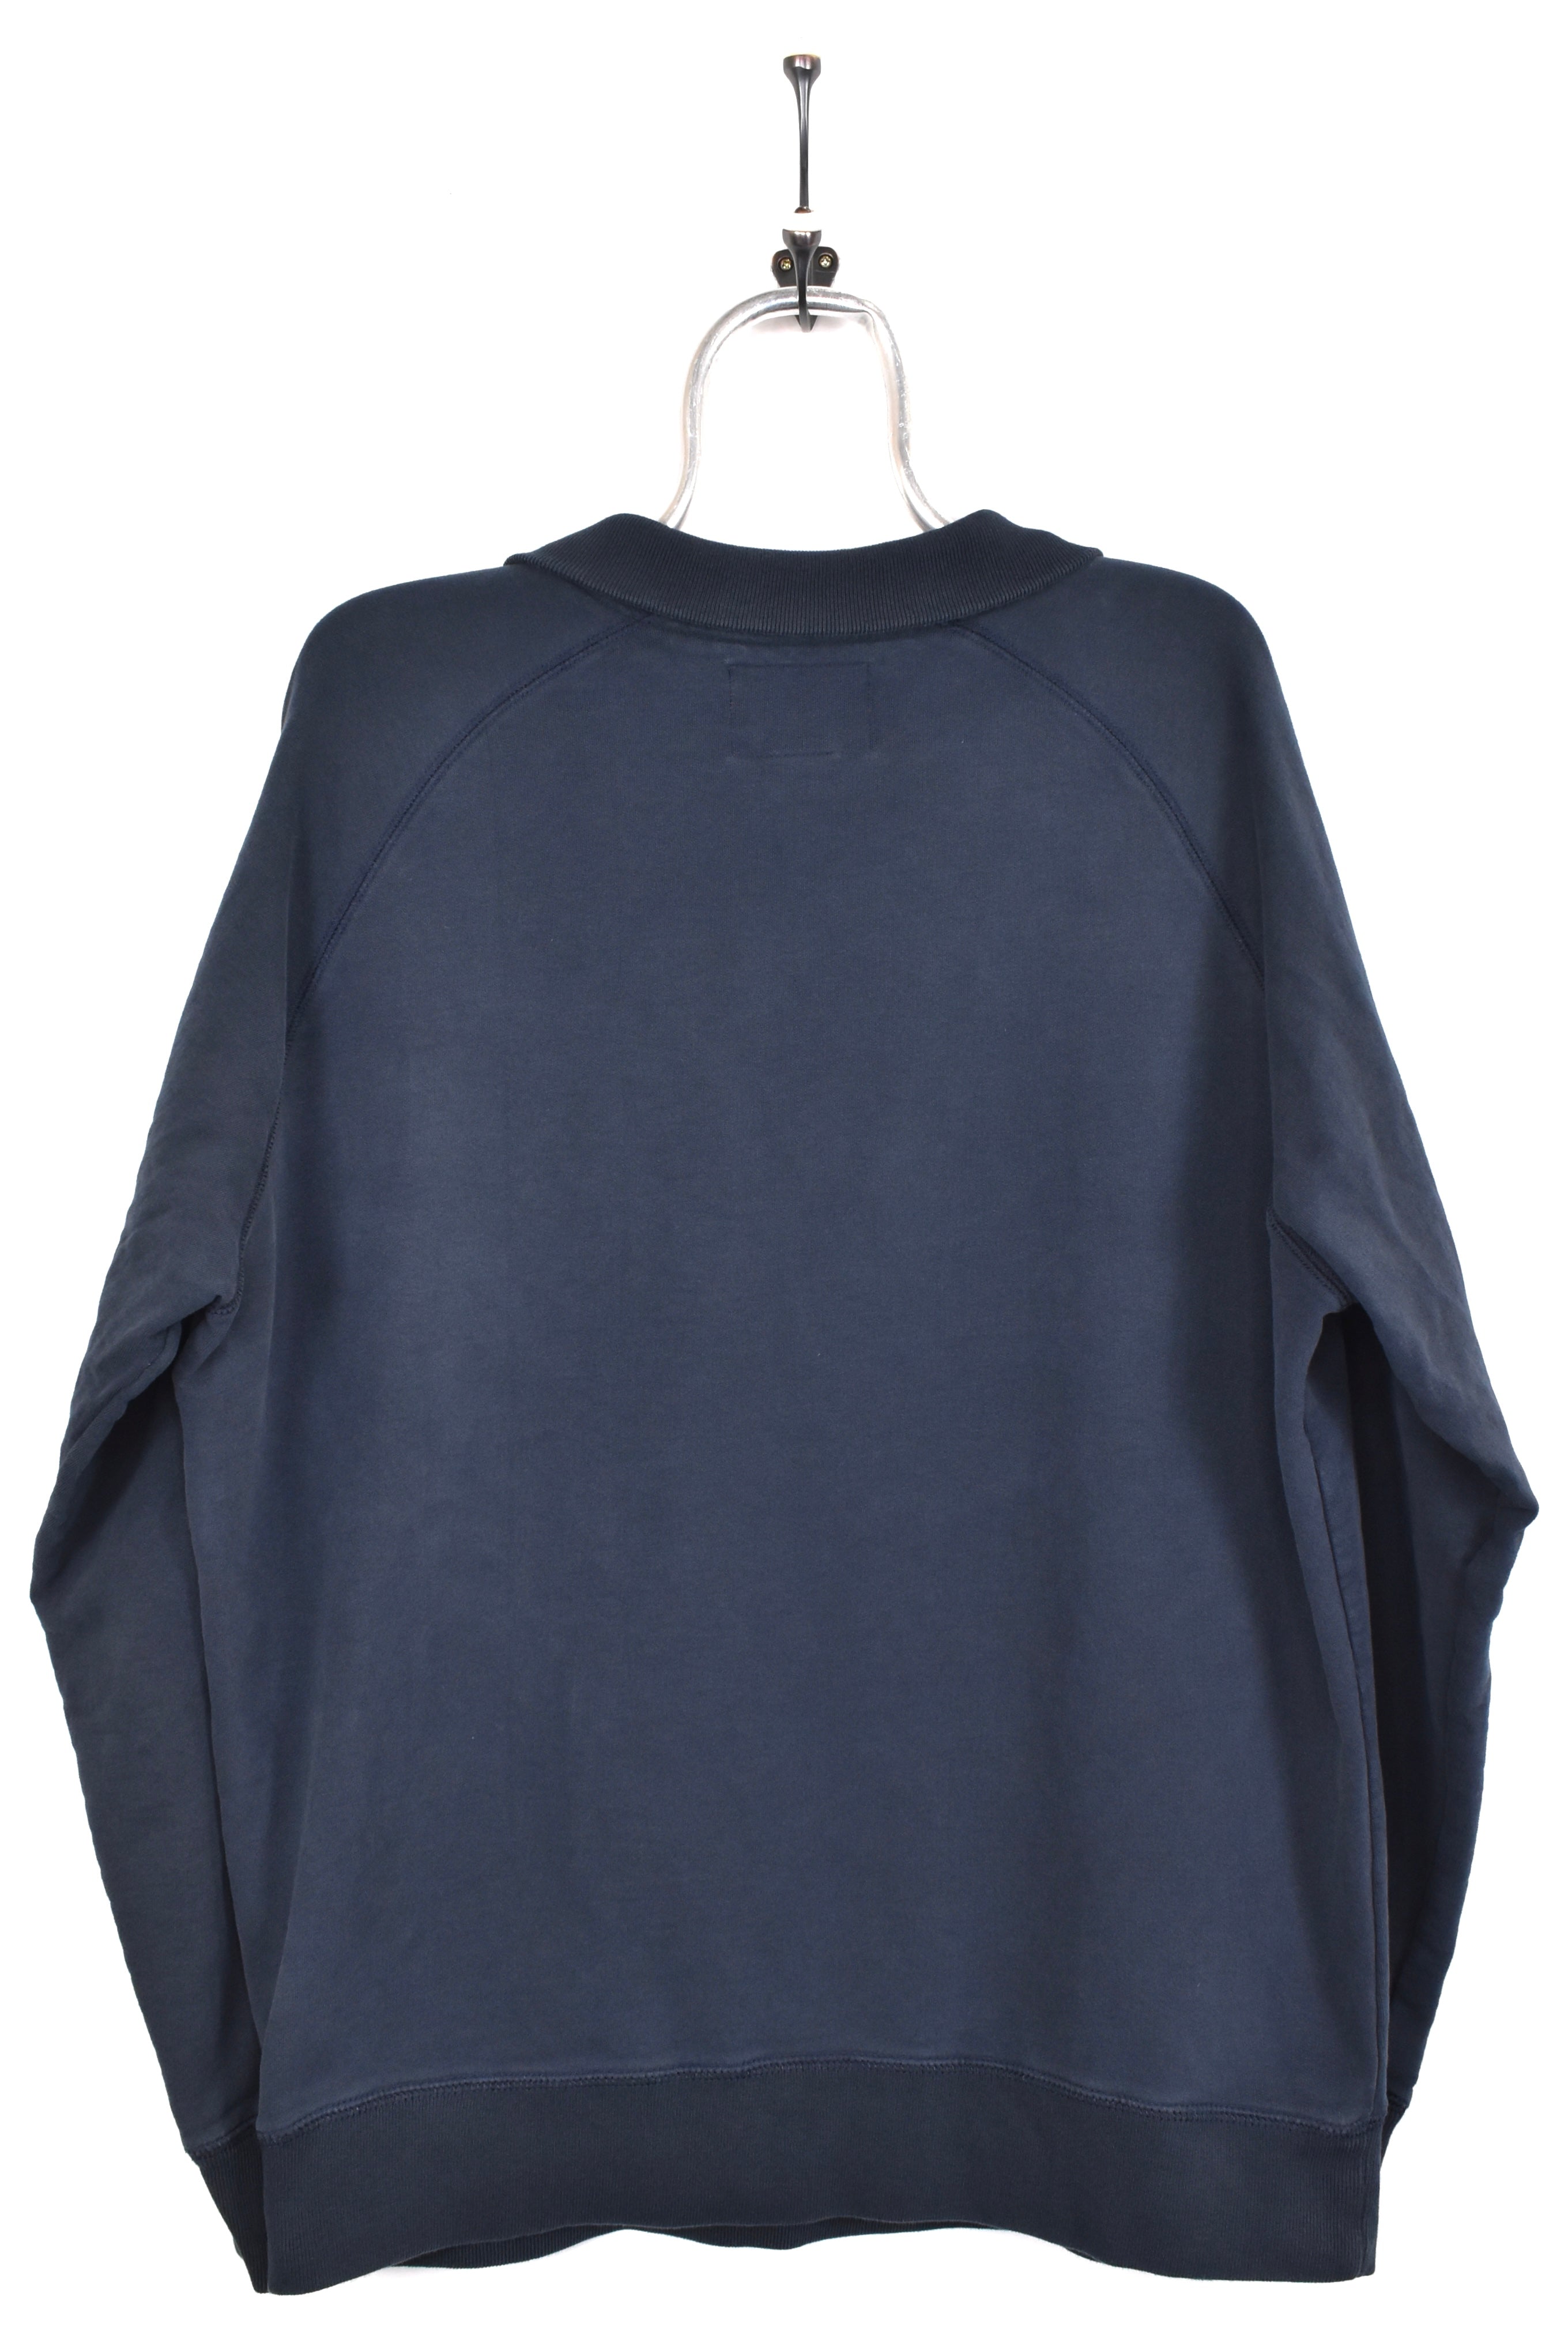 Vintage Denver Broncos sweatshirt, NFL navy blue 1/4 zip jumper - AU XL PRO SPORT